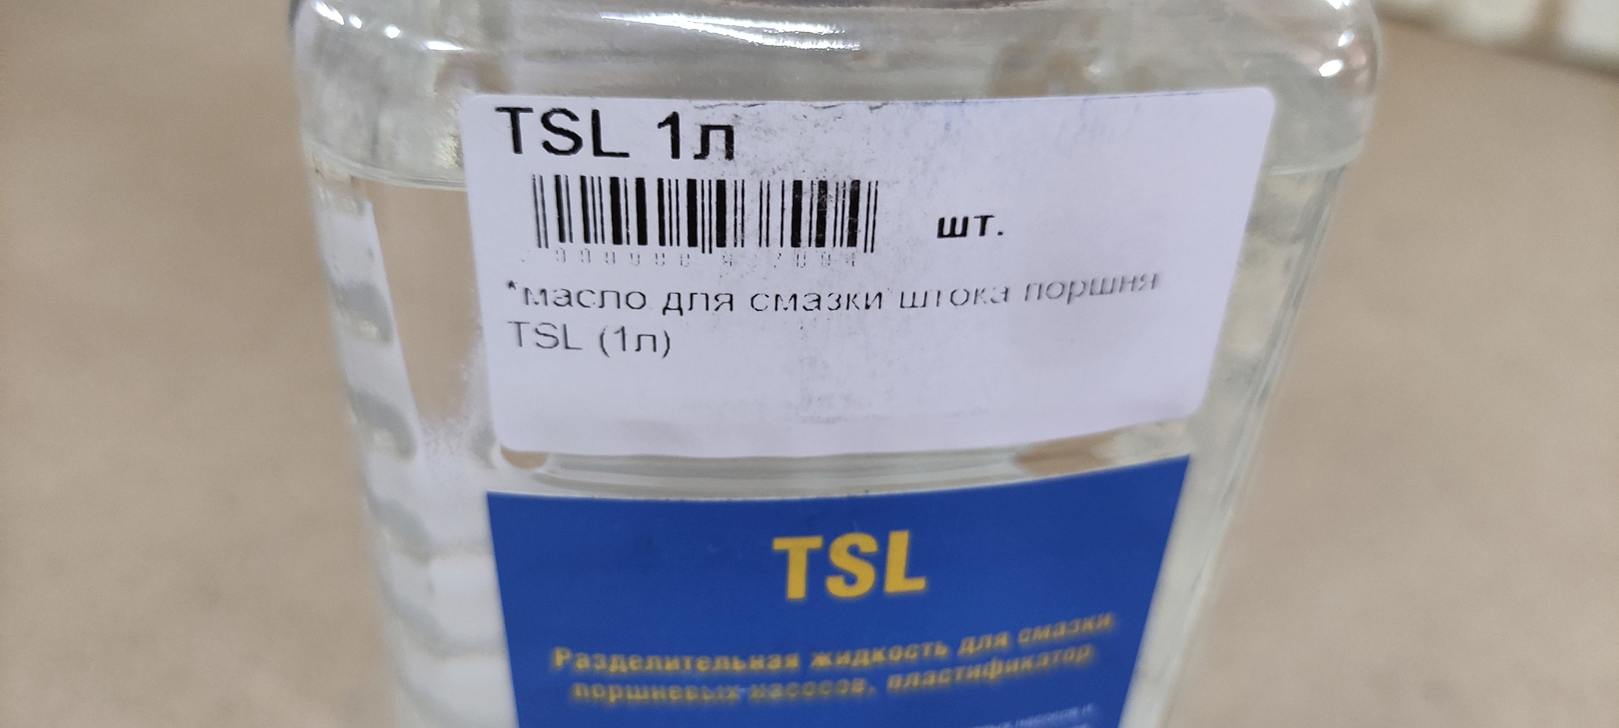 Масло для смазки штока поршня TSL